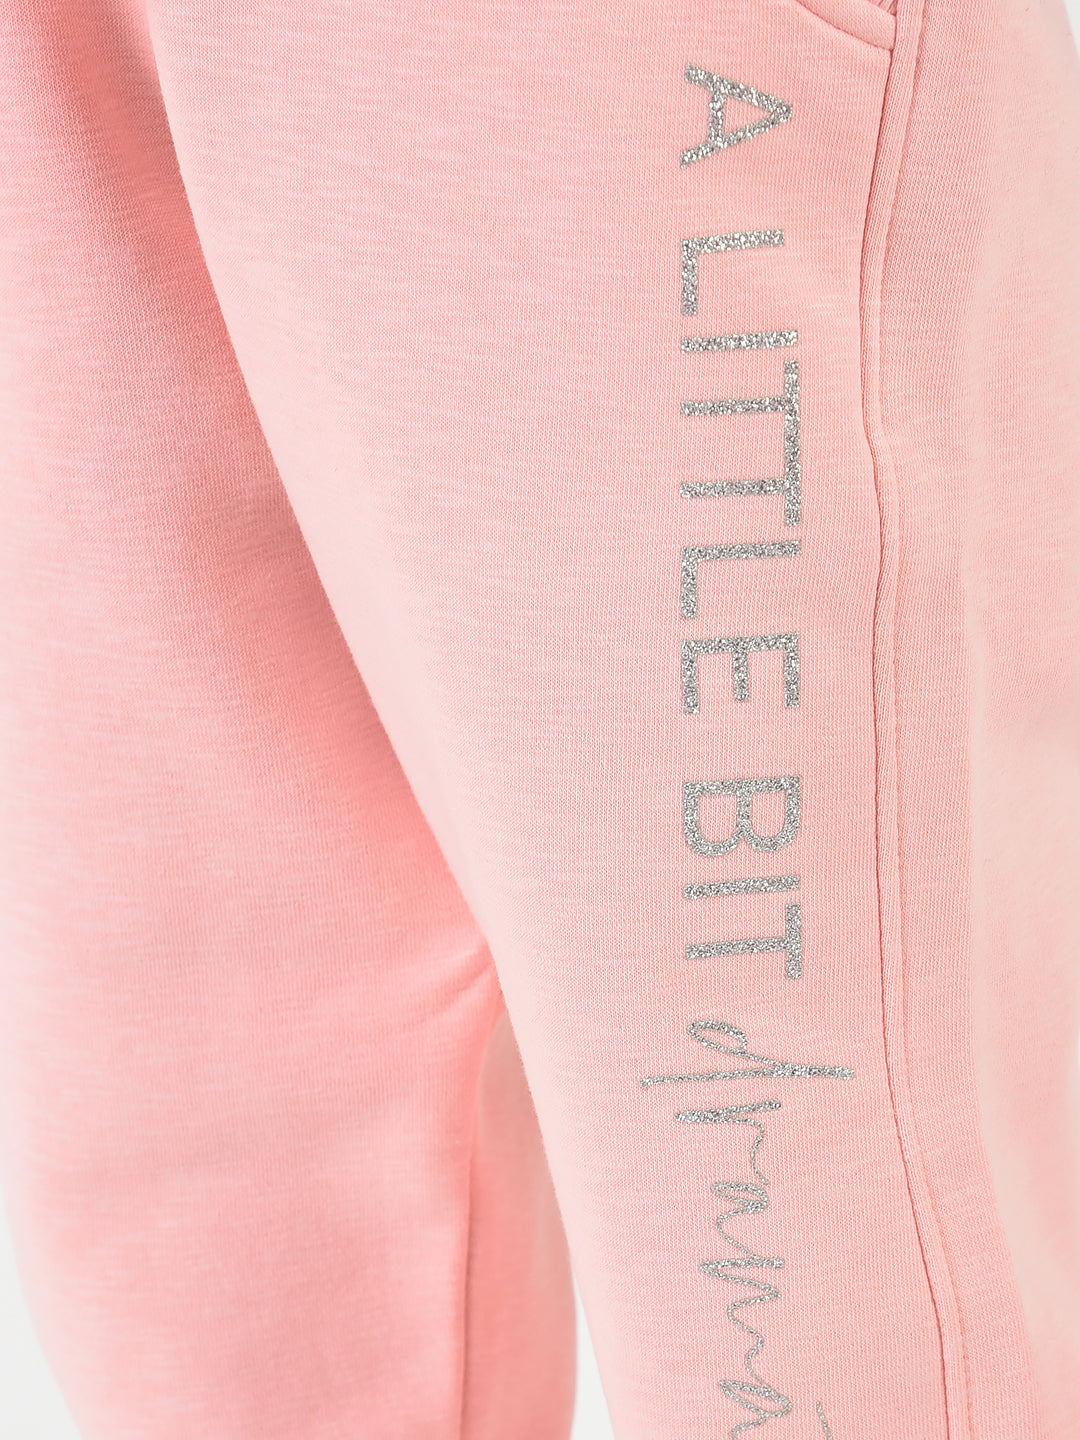 Trackpants Buy GirlsBlack PinkCottonTrackpants Online  Clithscom